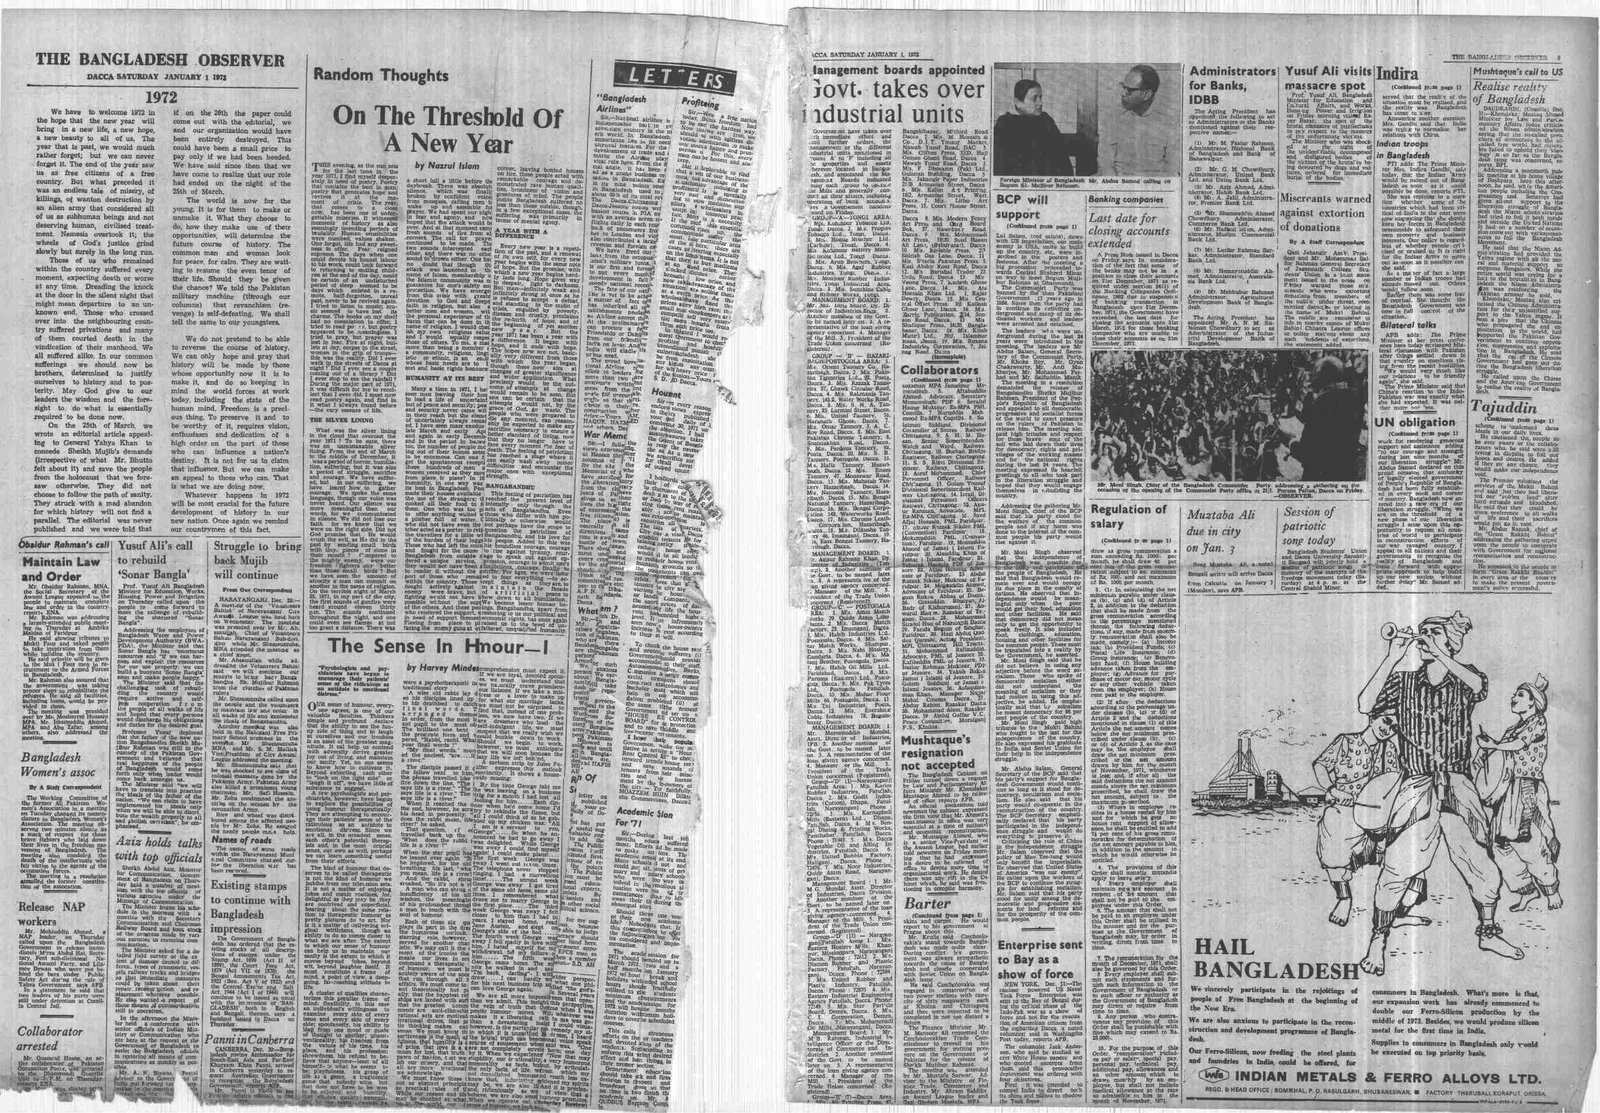 1JAN1972-Bangladesh Observer-Regular-Page 2 and 5